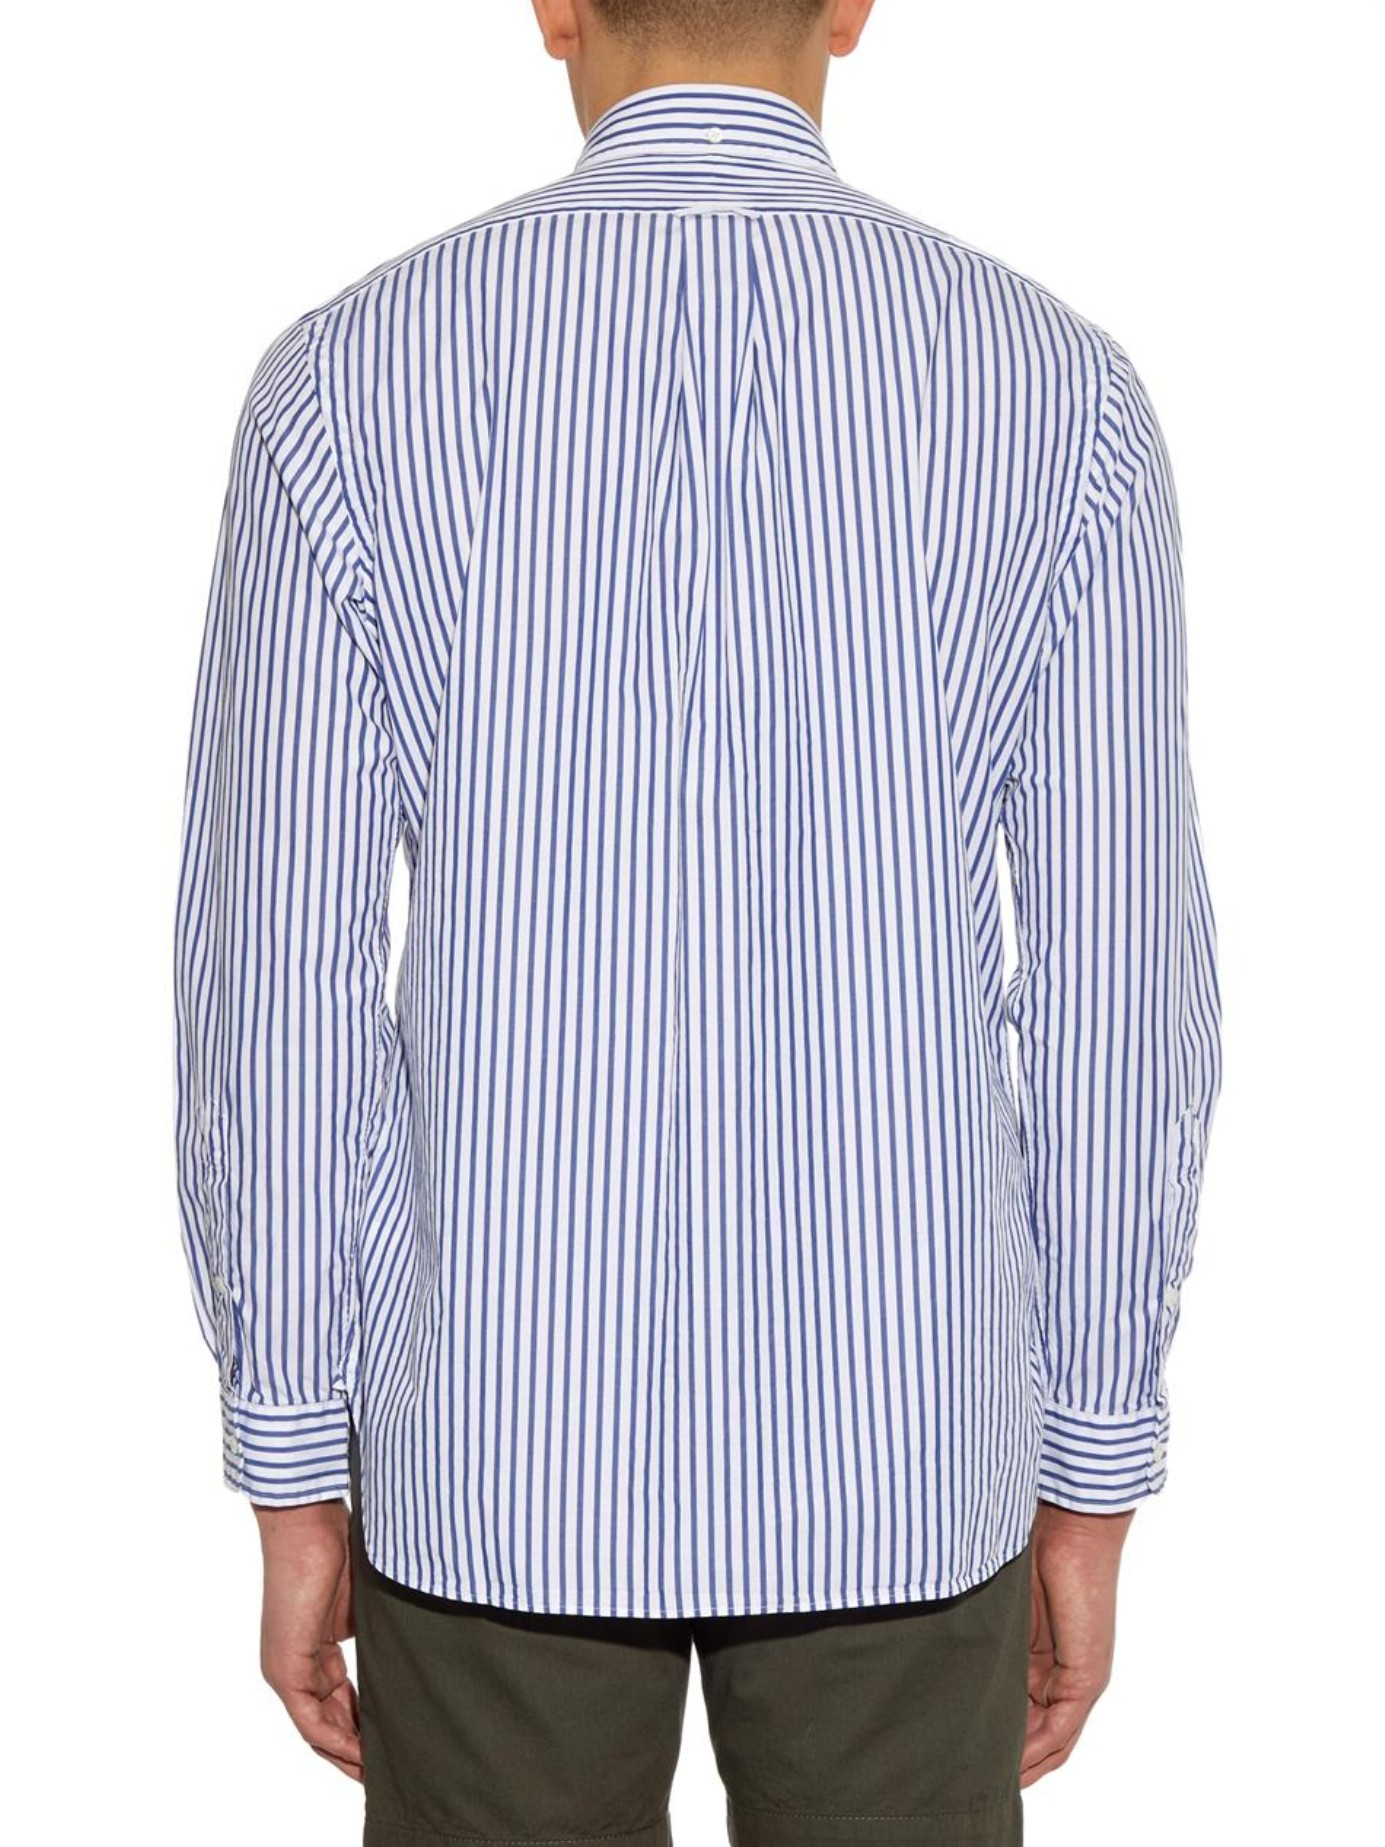 polo ralph lauren custom fit striped shirt